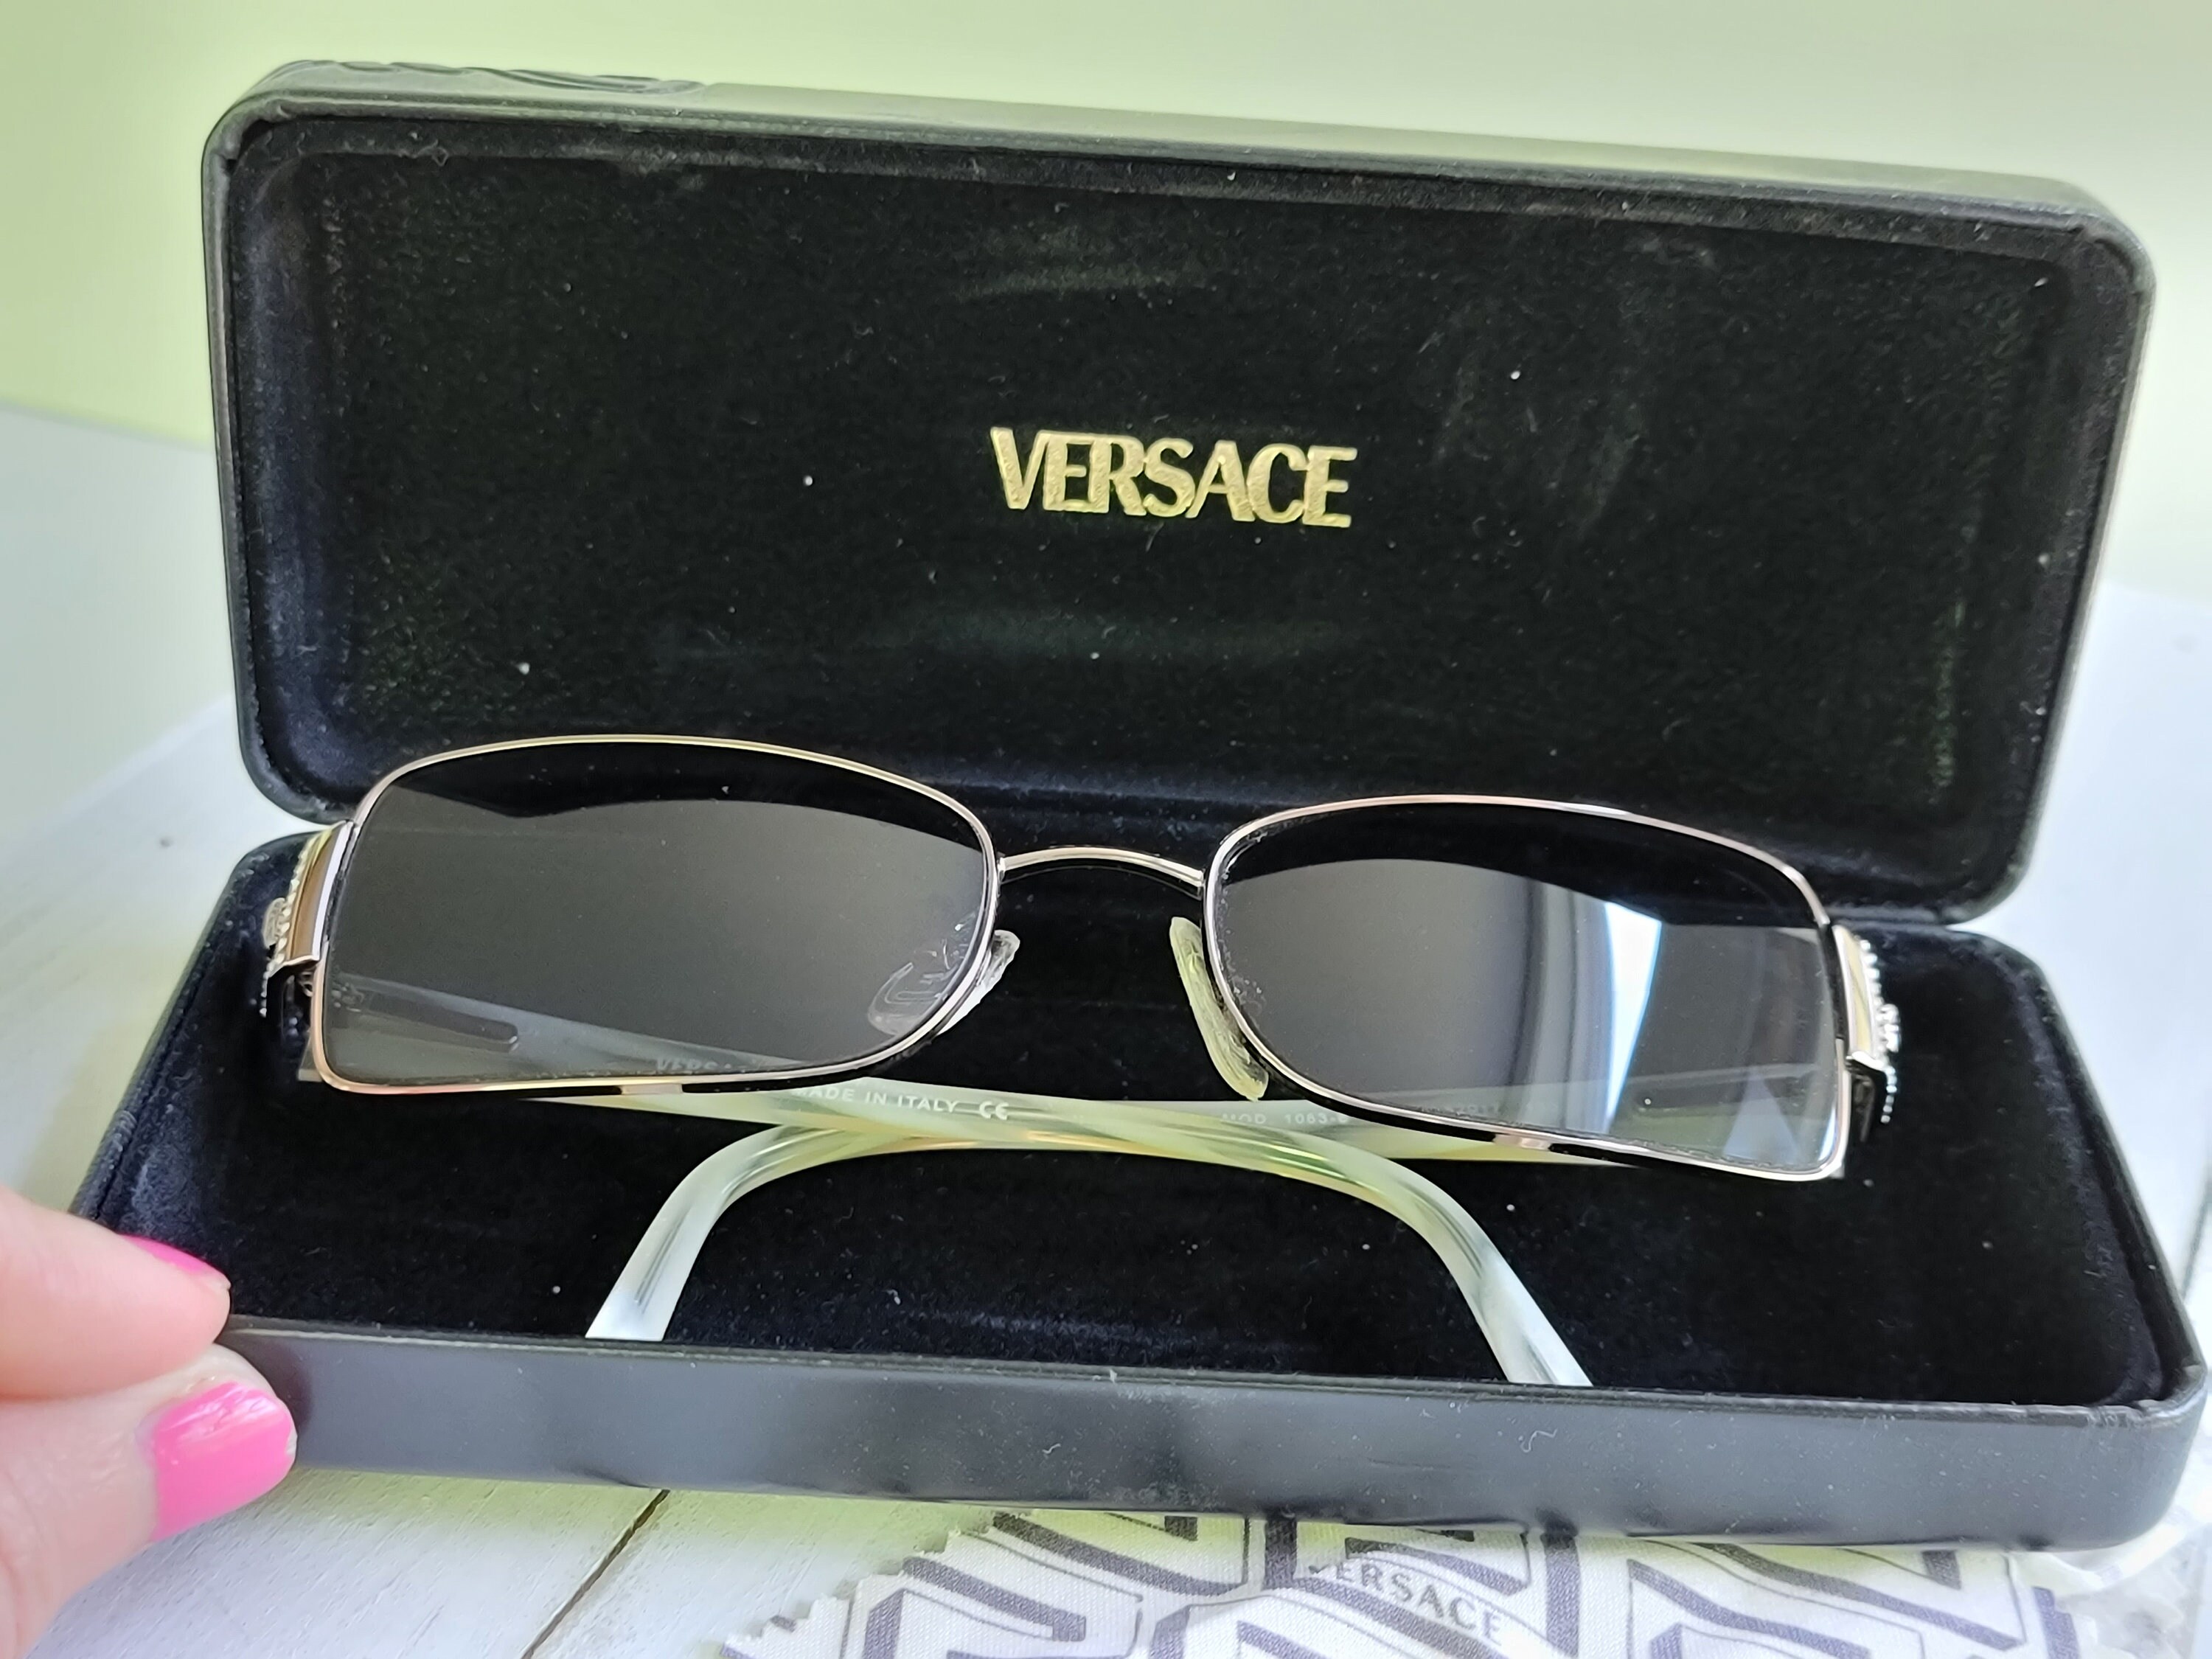 Versace Sunglasses Case - Etsy